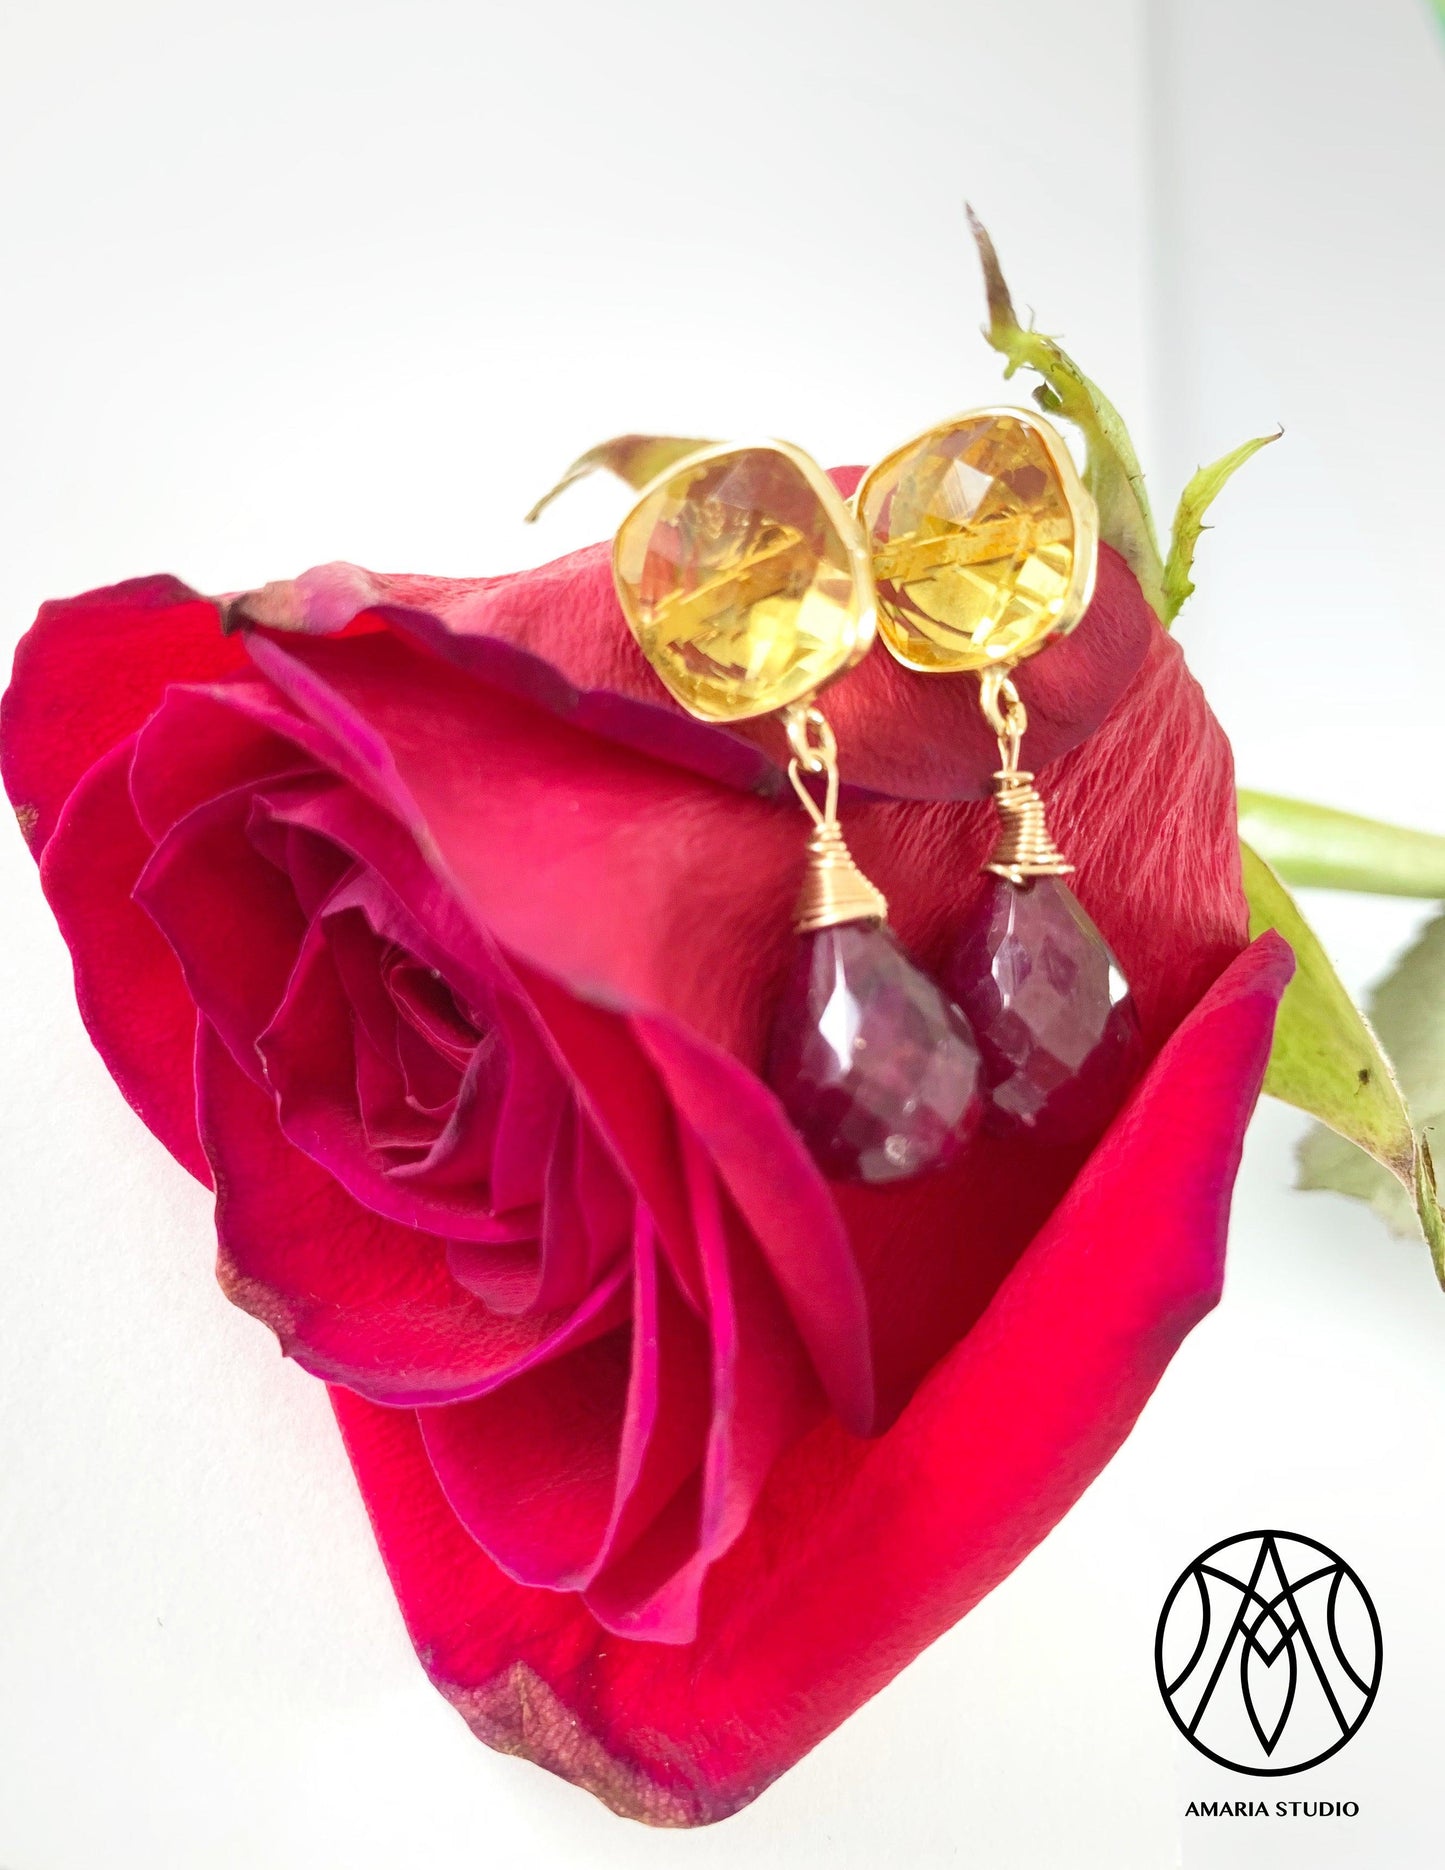 Lemon quartz and ruby earrings - Amaria Studio